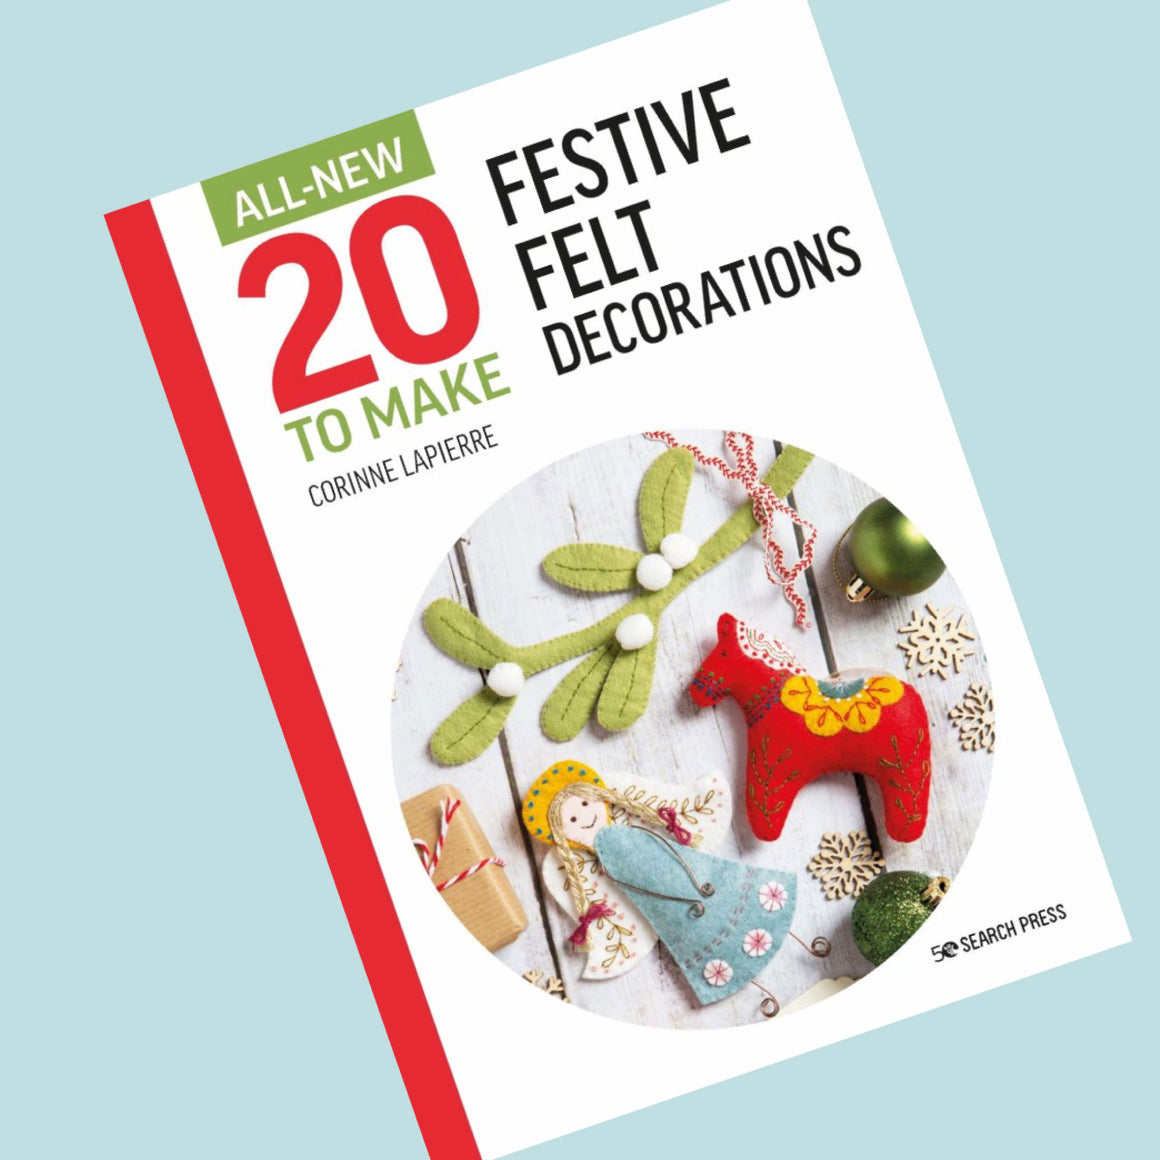 All-New Twenty to Make: Festive Felt Decorations Book